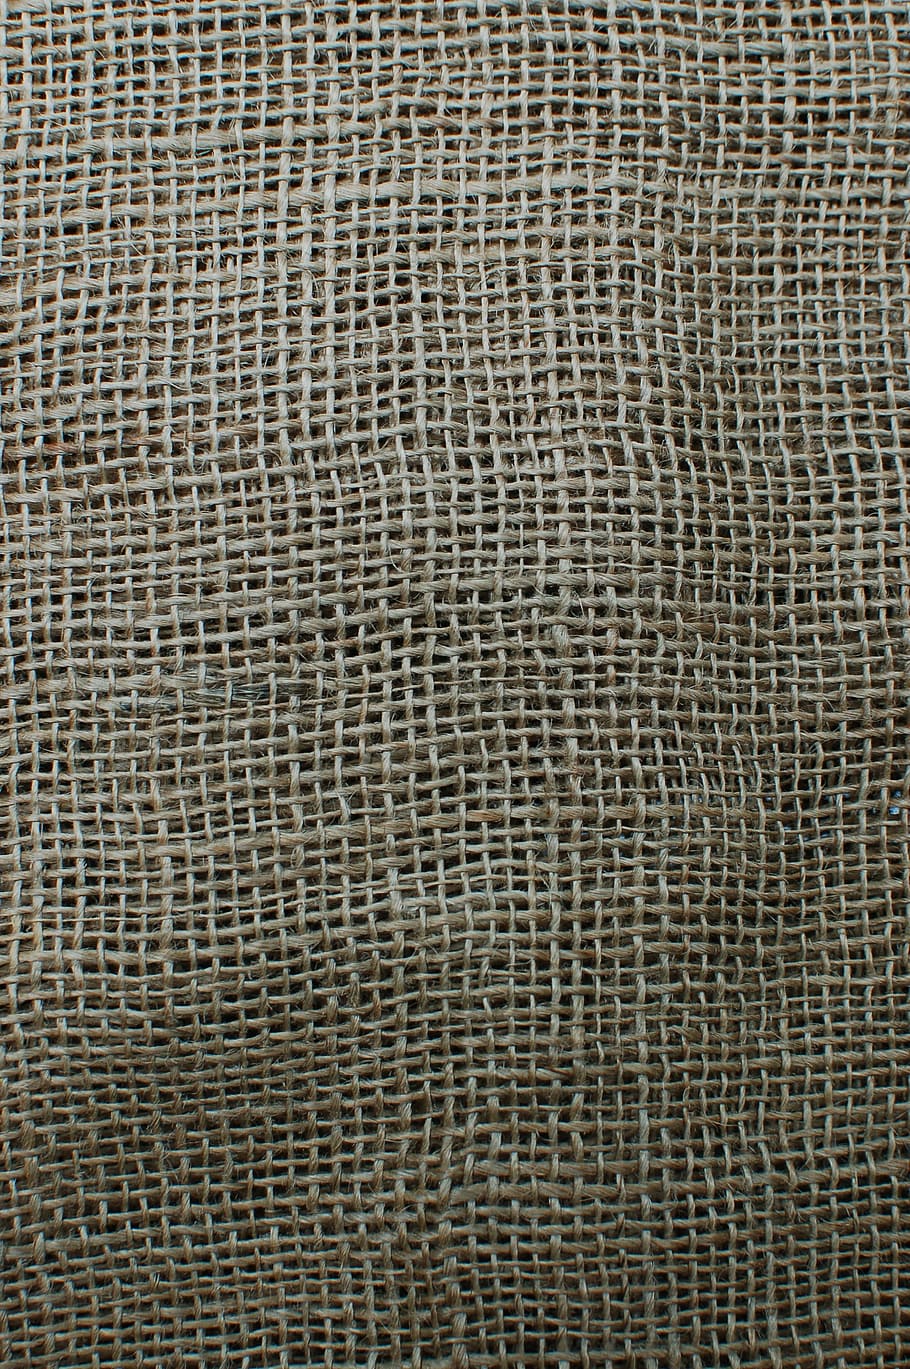 brown textile, burlap, cloth, sack, fabric, texture, rough, backgrounds, pattern, material